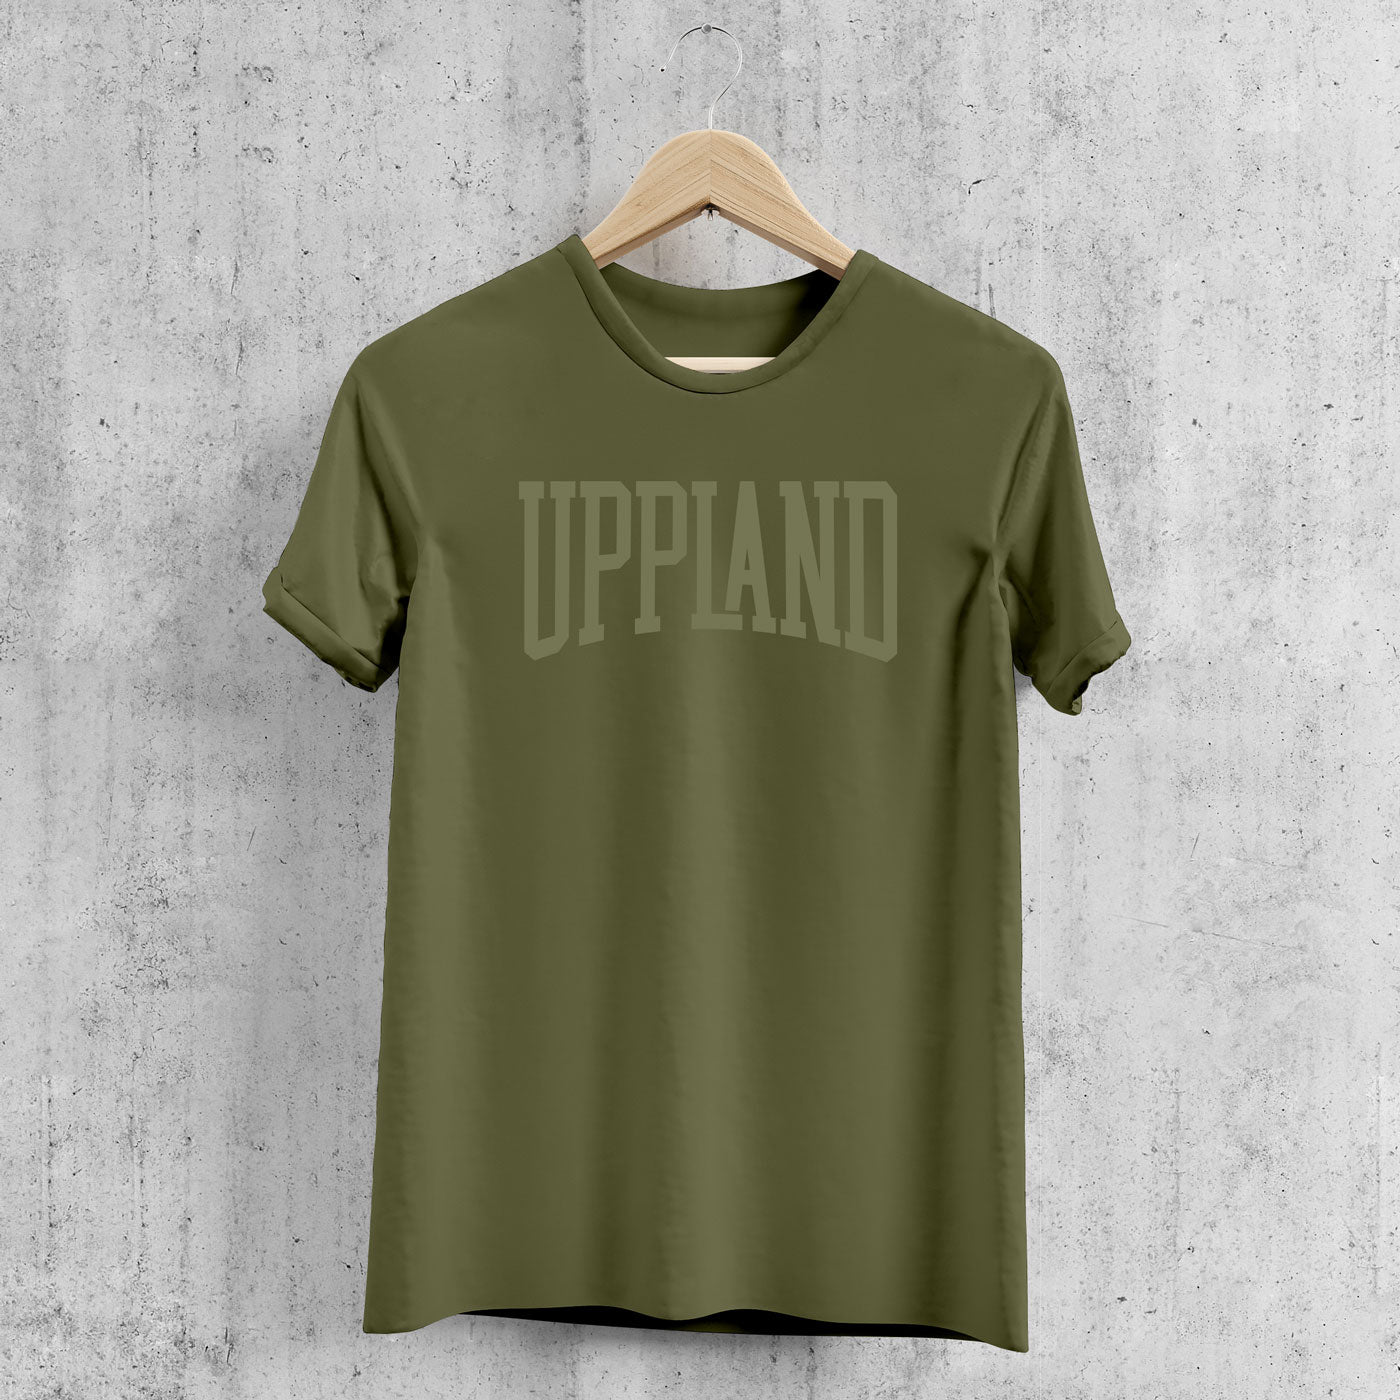 Uppland T-shirt, army monochrome